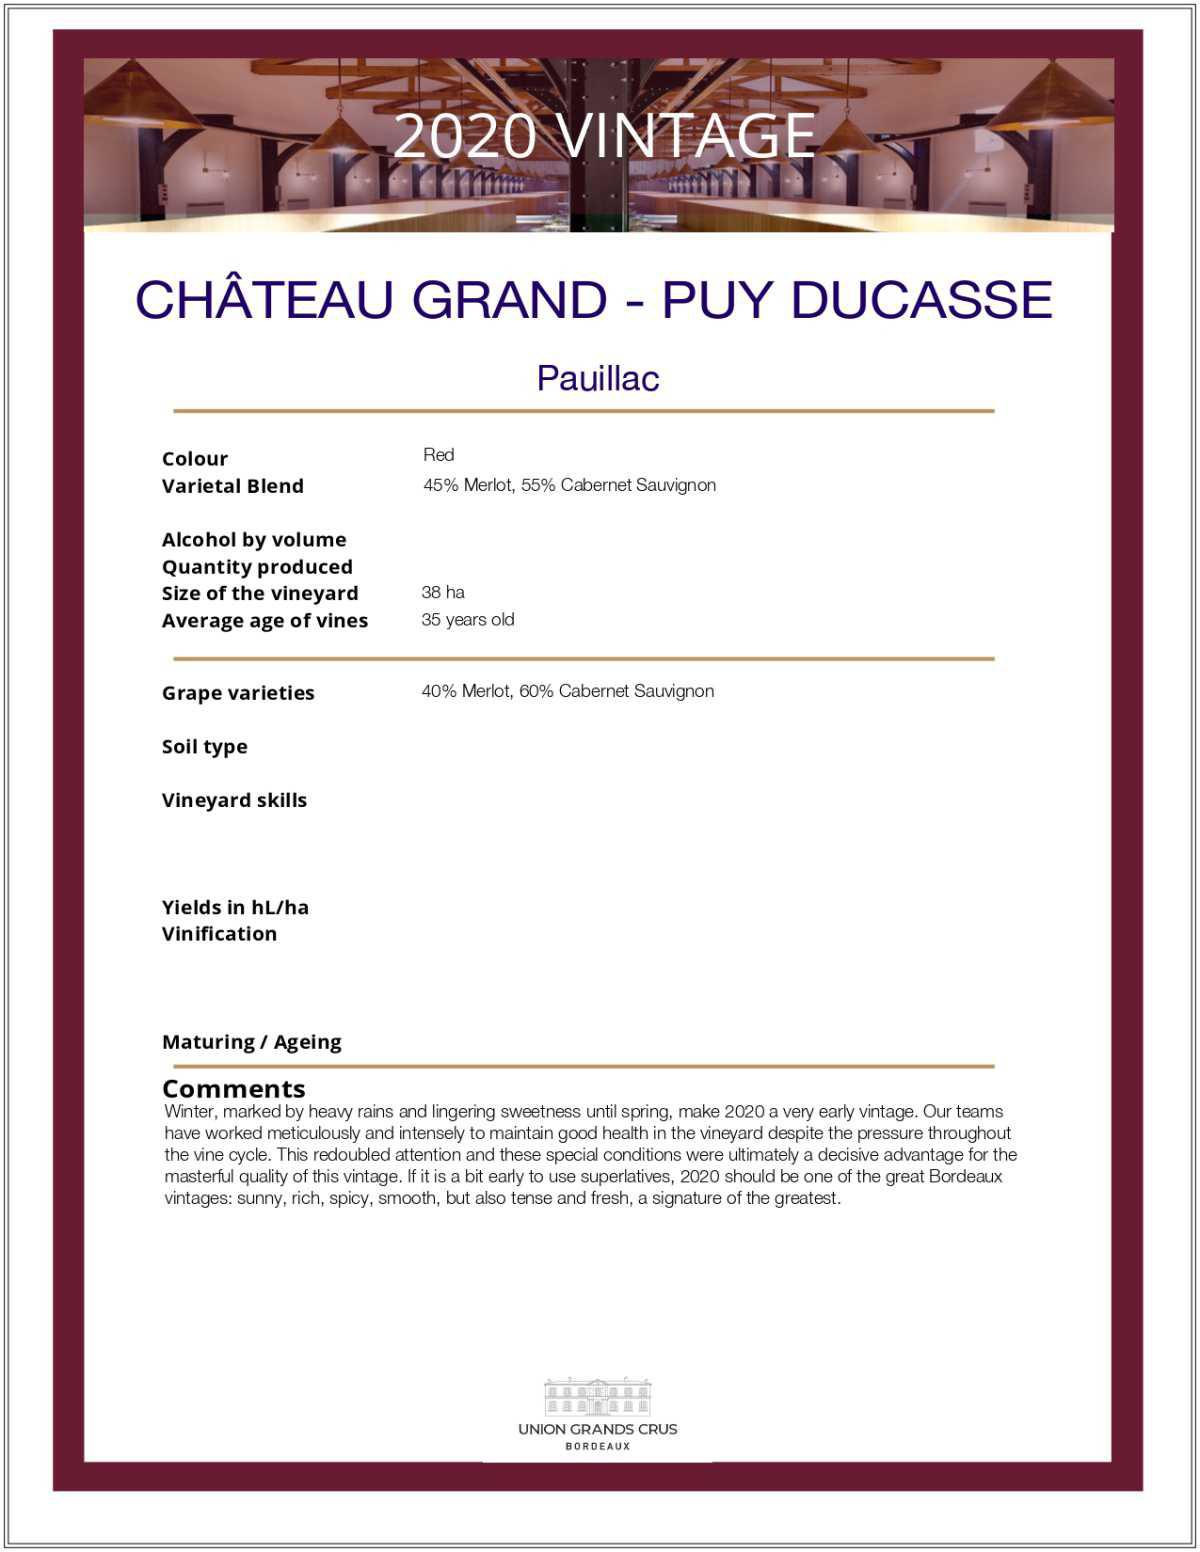 Château Grand - Puy Ducasse